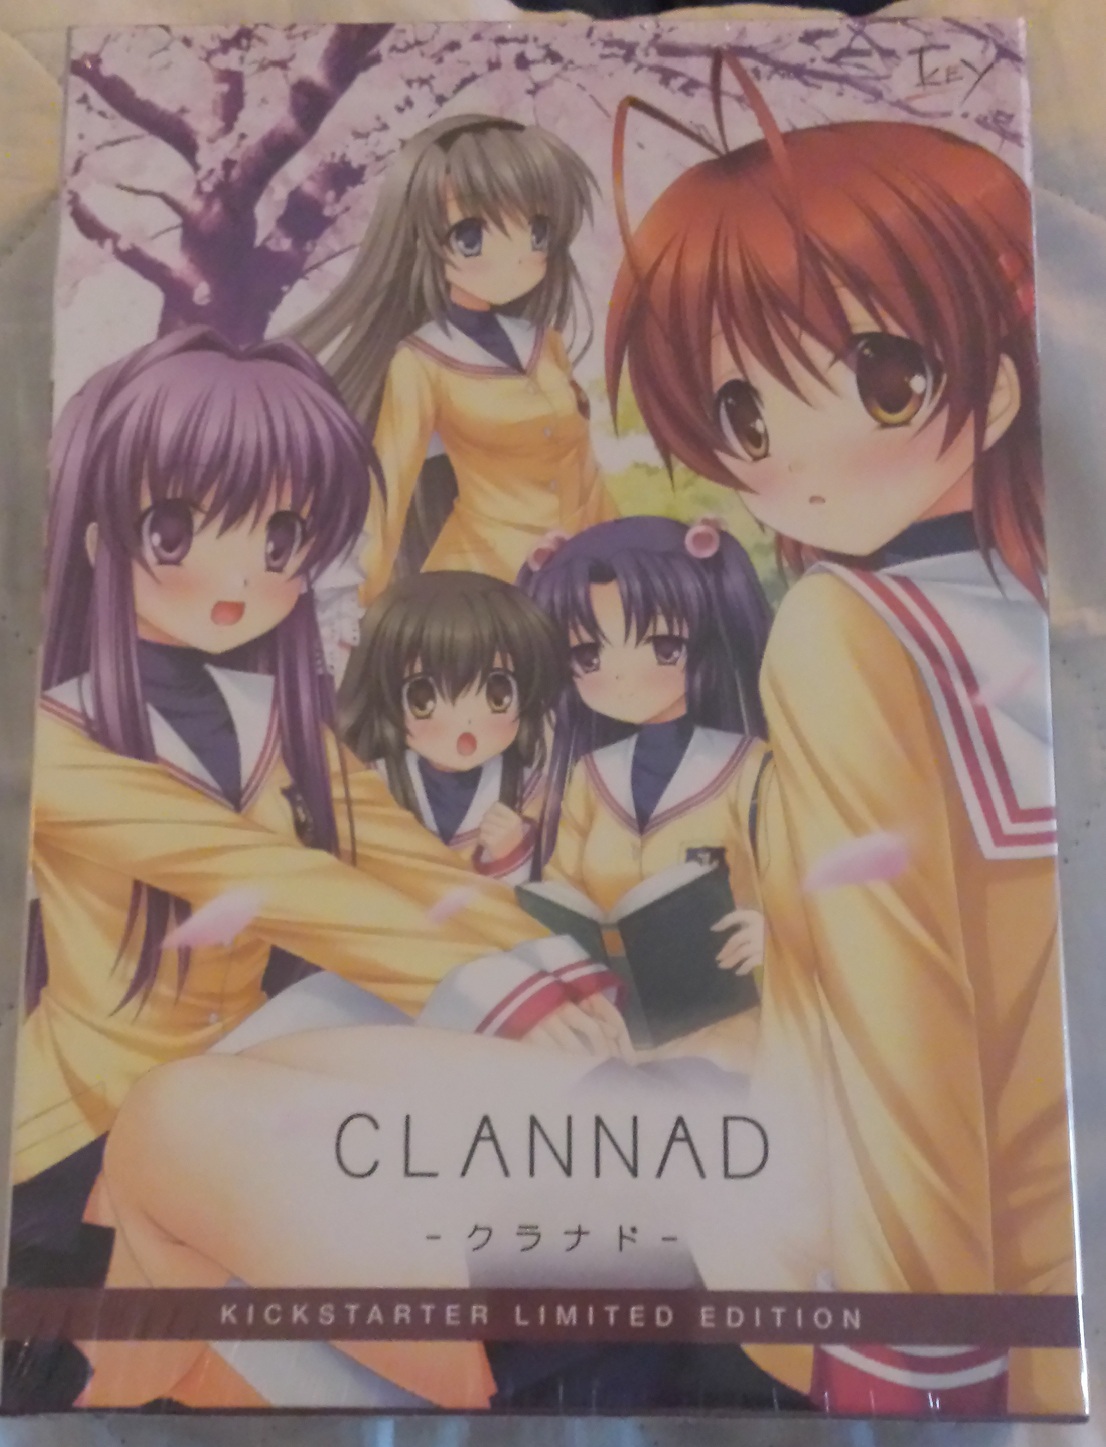 CLANNAD Anthology Manga Discussion - Key Discussion - Kazamatsuri Forum